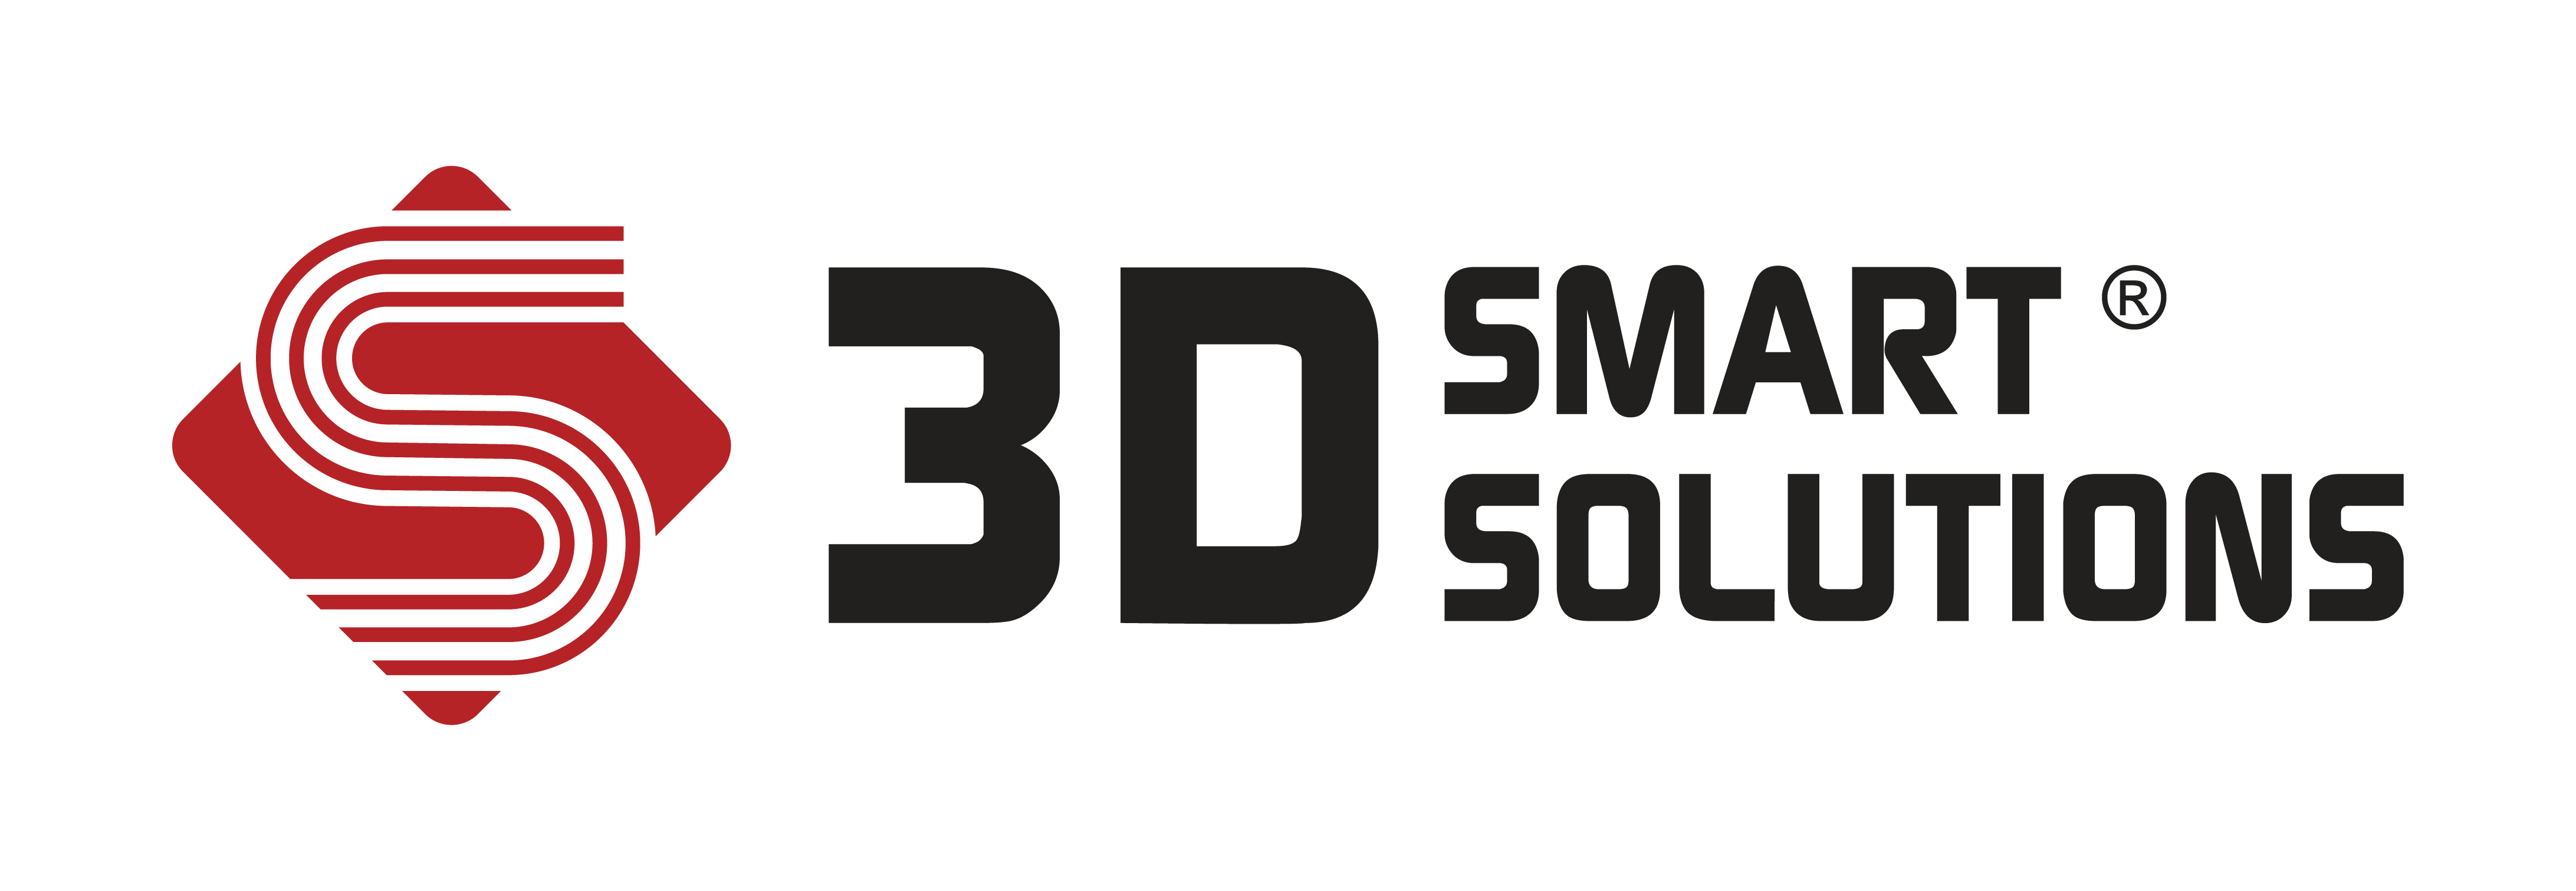 3D Smart Solutions